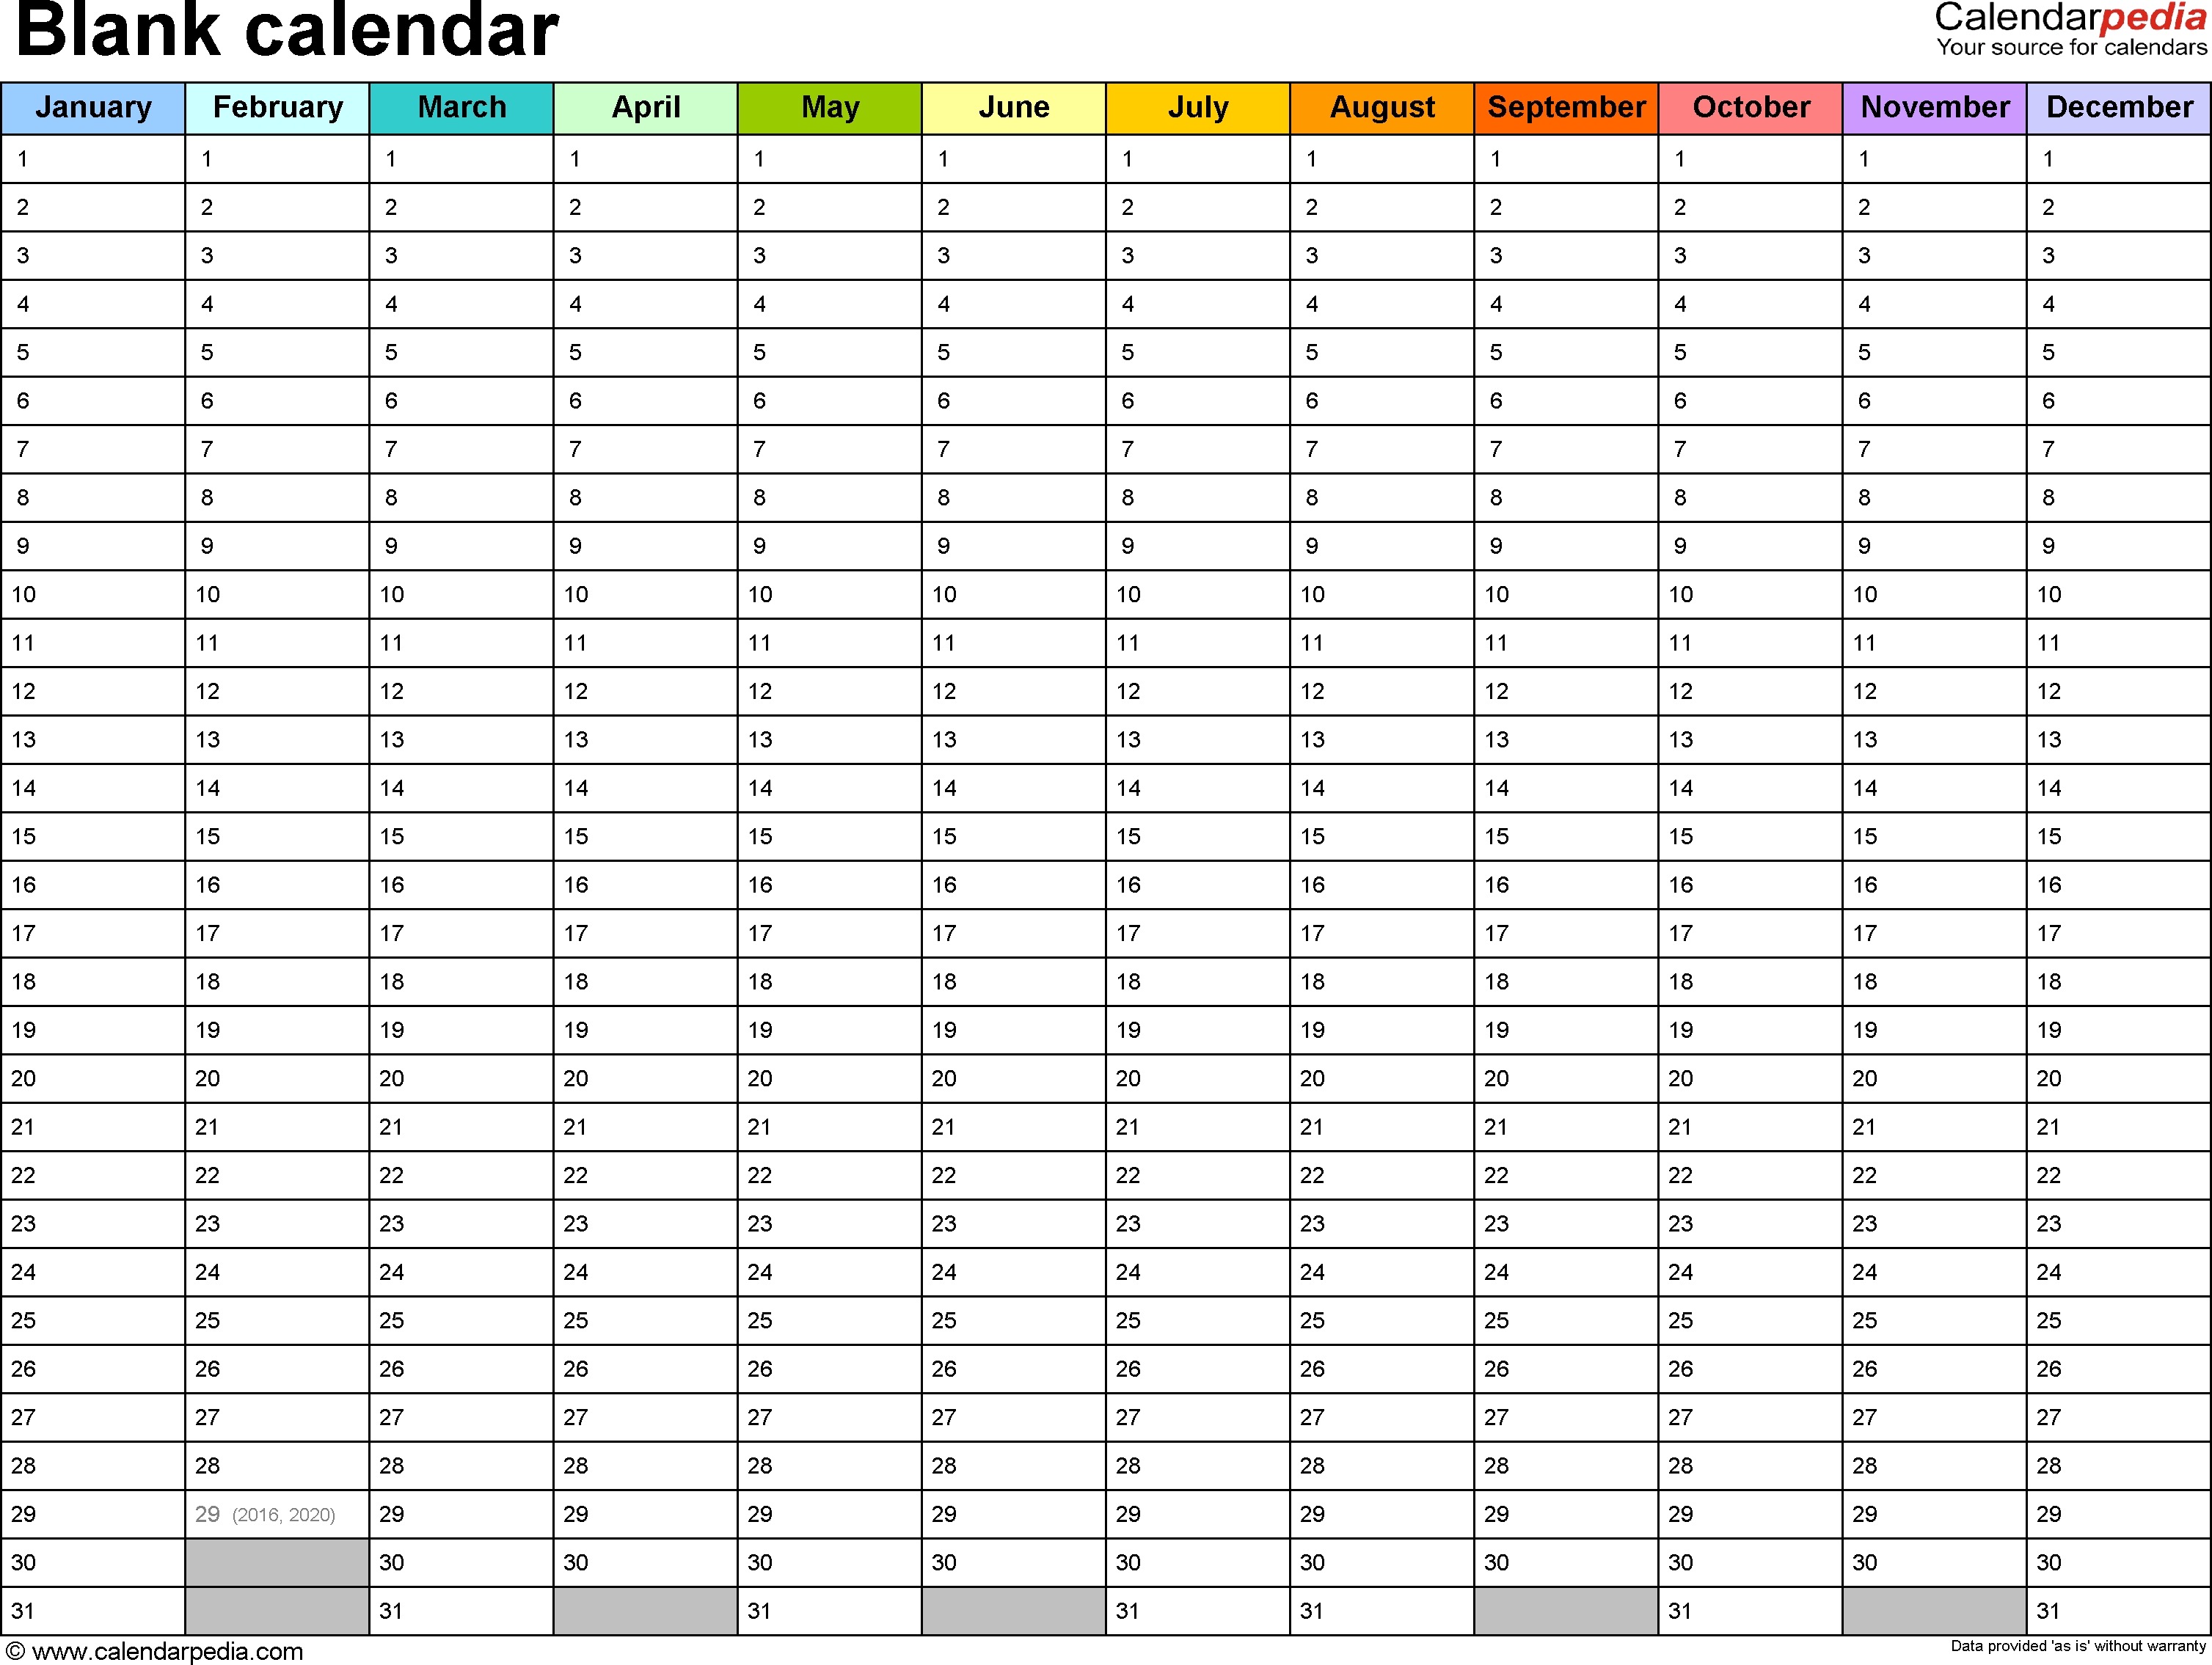 Blank Calendar - 9 Free Printable Microsoft Word Templates within One Page Annual Calendar Printable